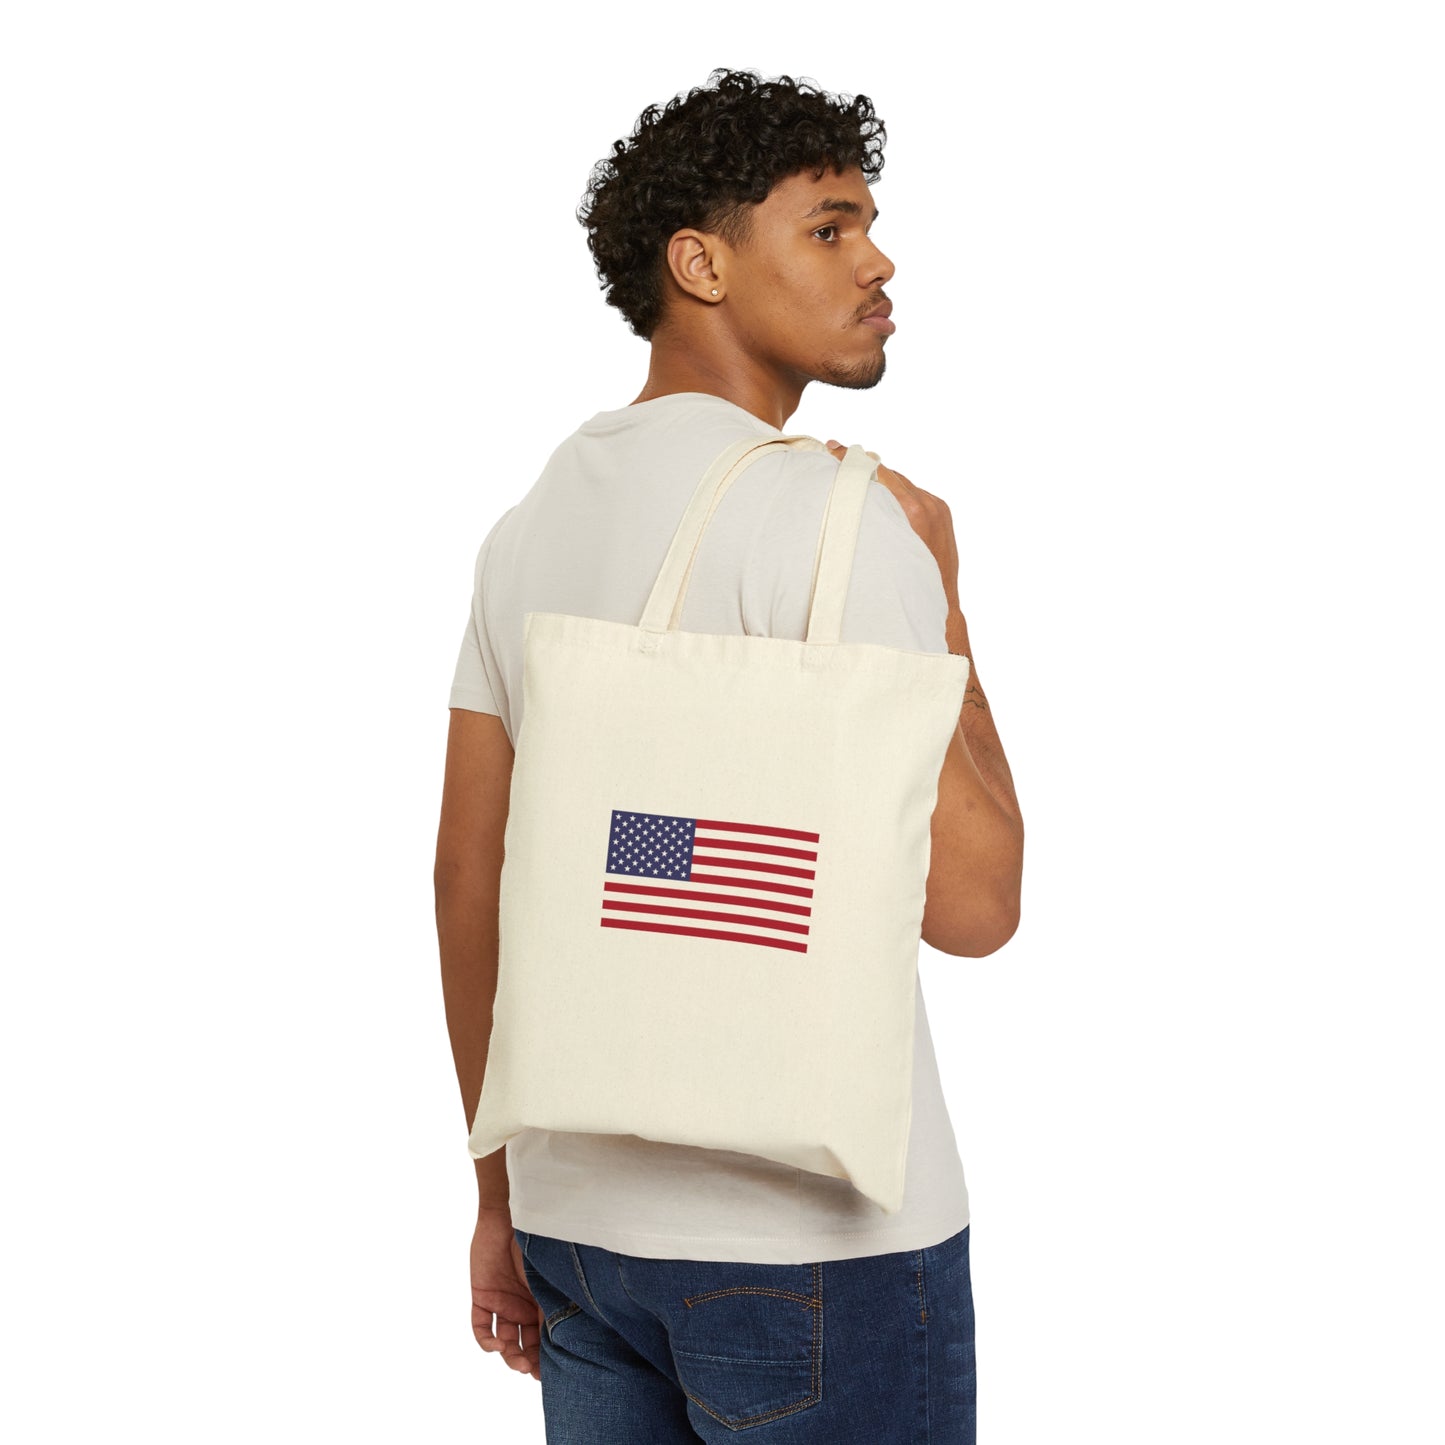 American Flag, Cotton Canvas Tote Bag